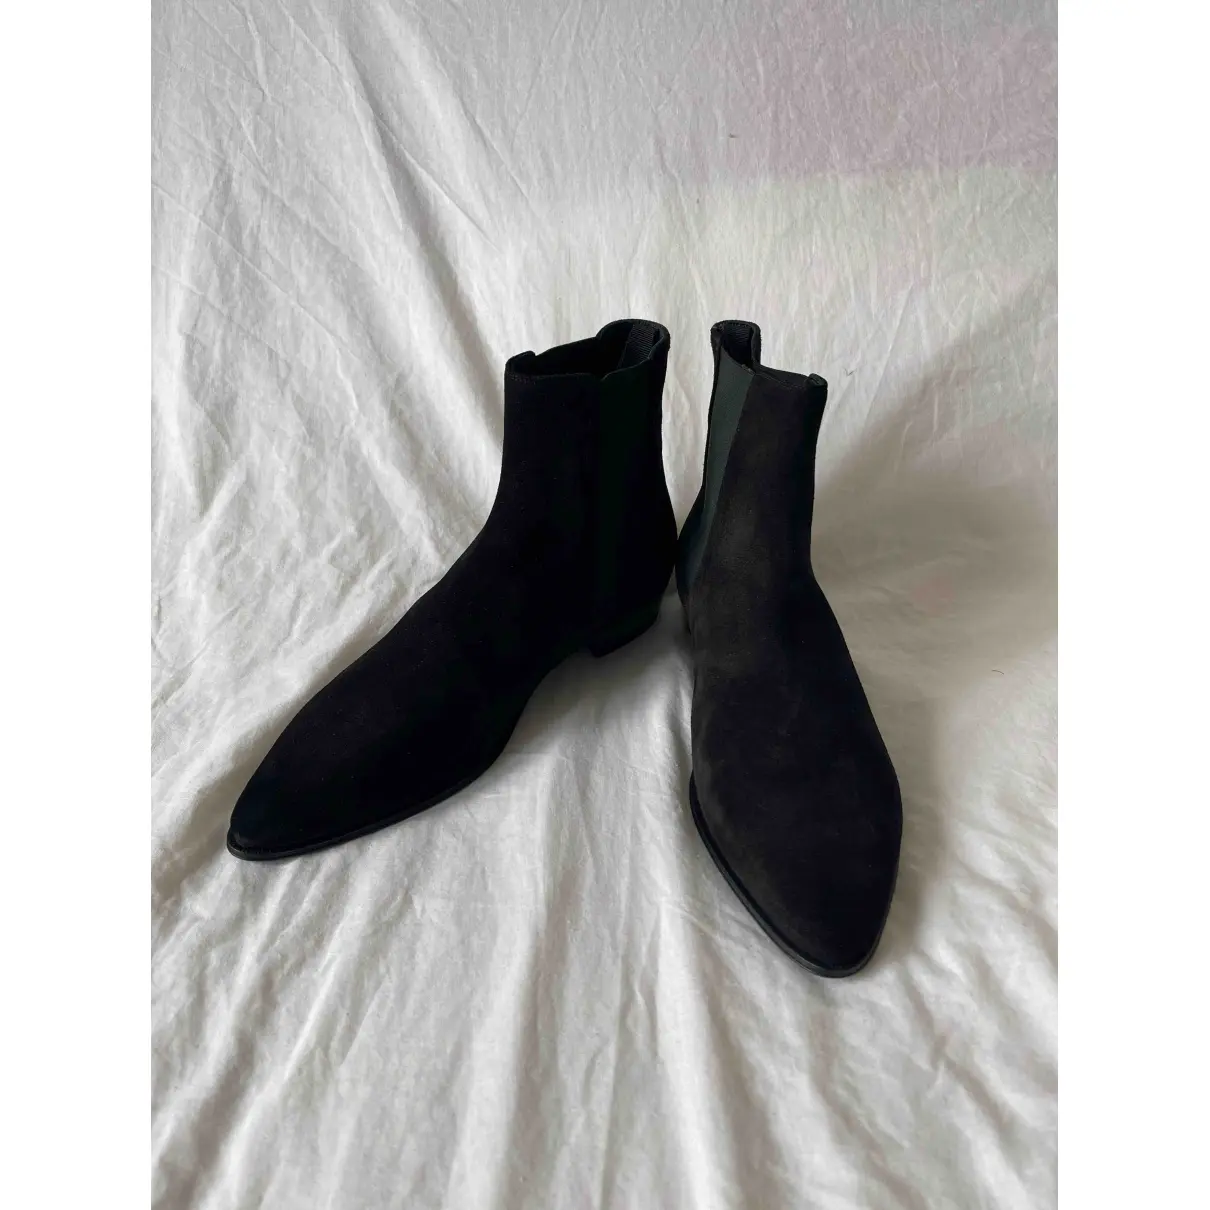 Buy Celine Jacno boots online